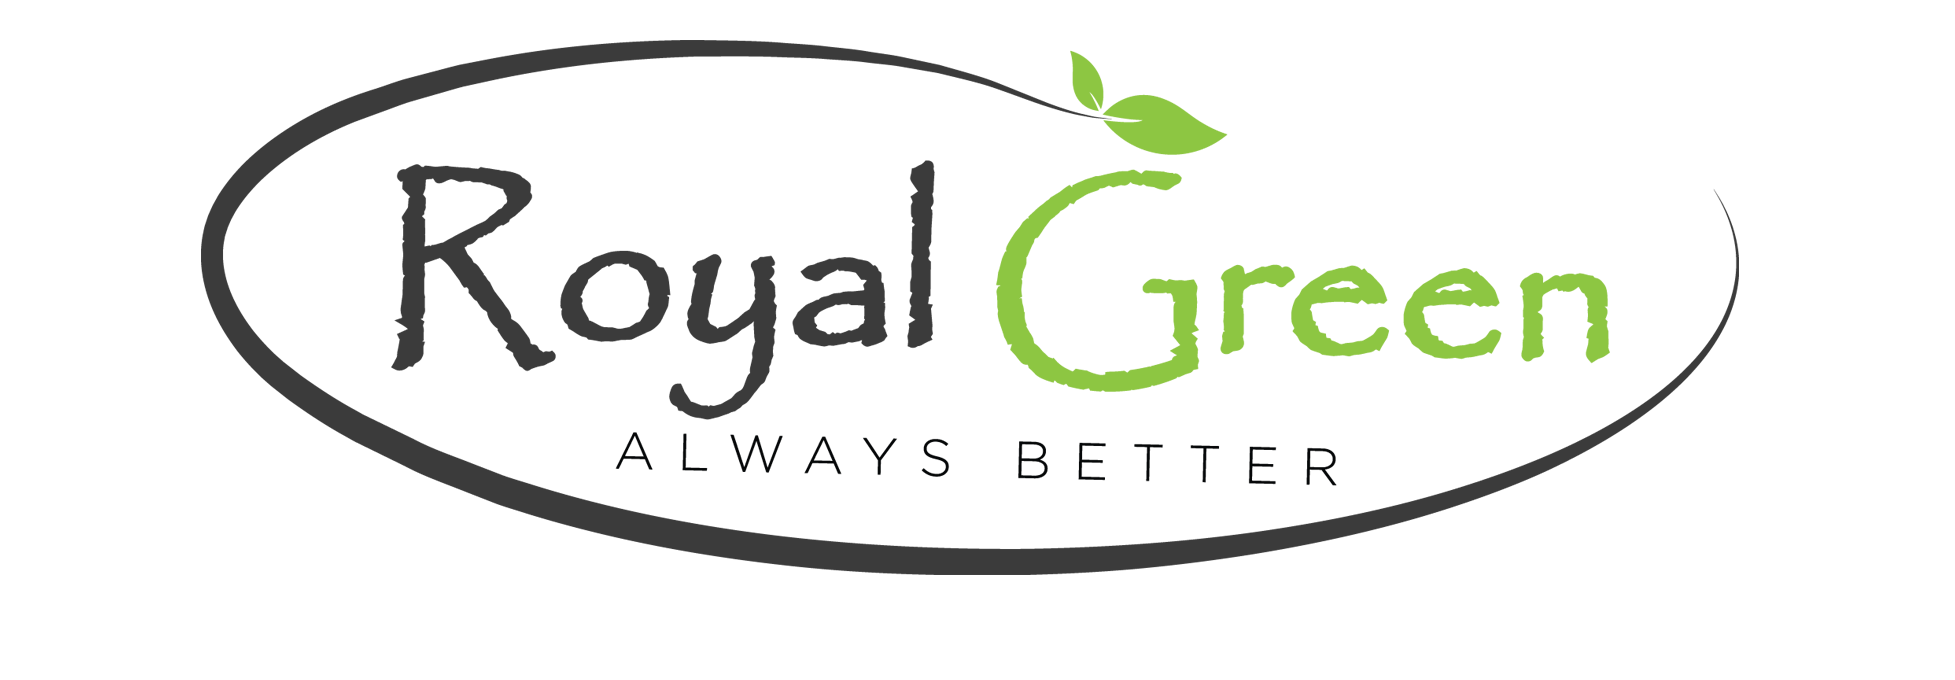 royal green logo